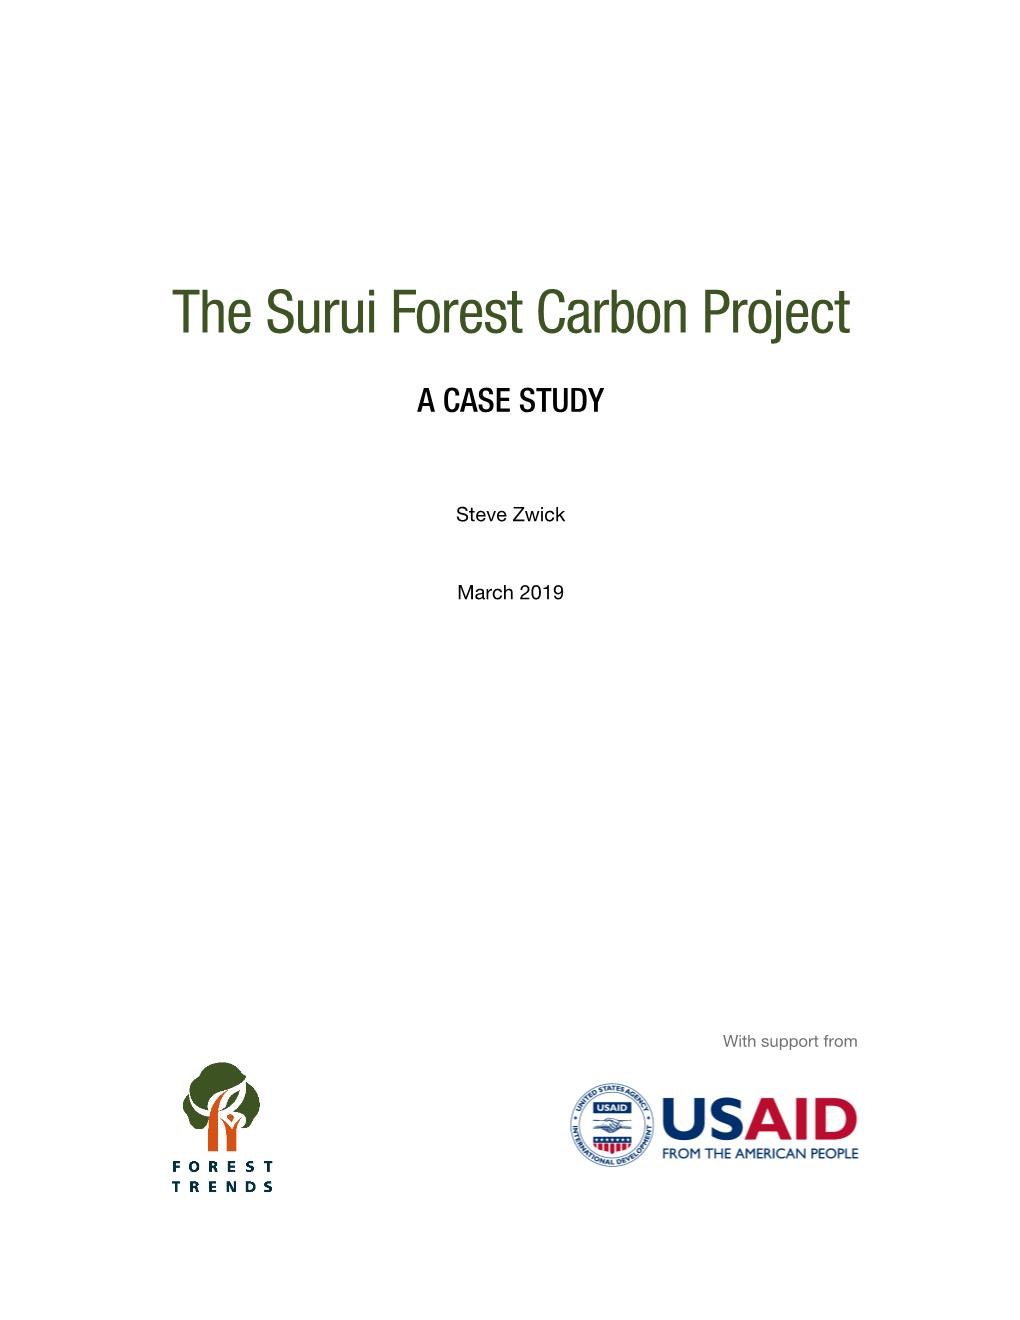 CASE STUDY the Surui Forest Carbon Project